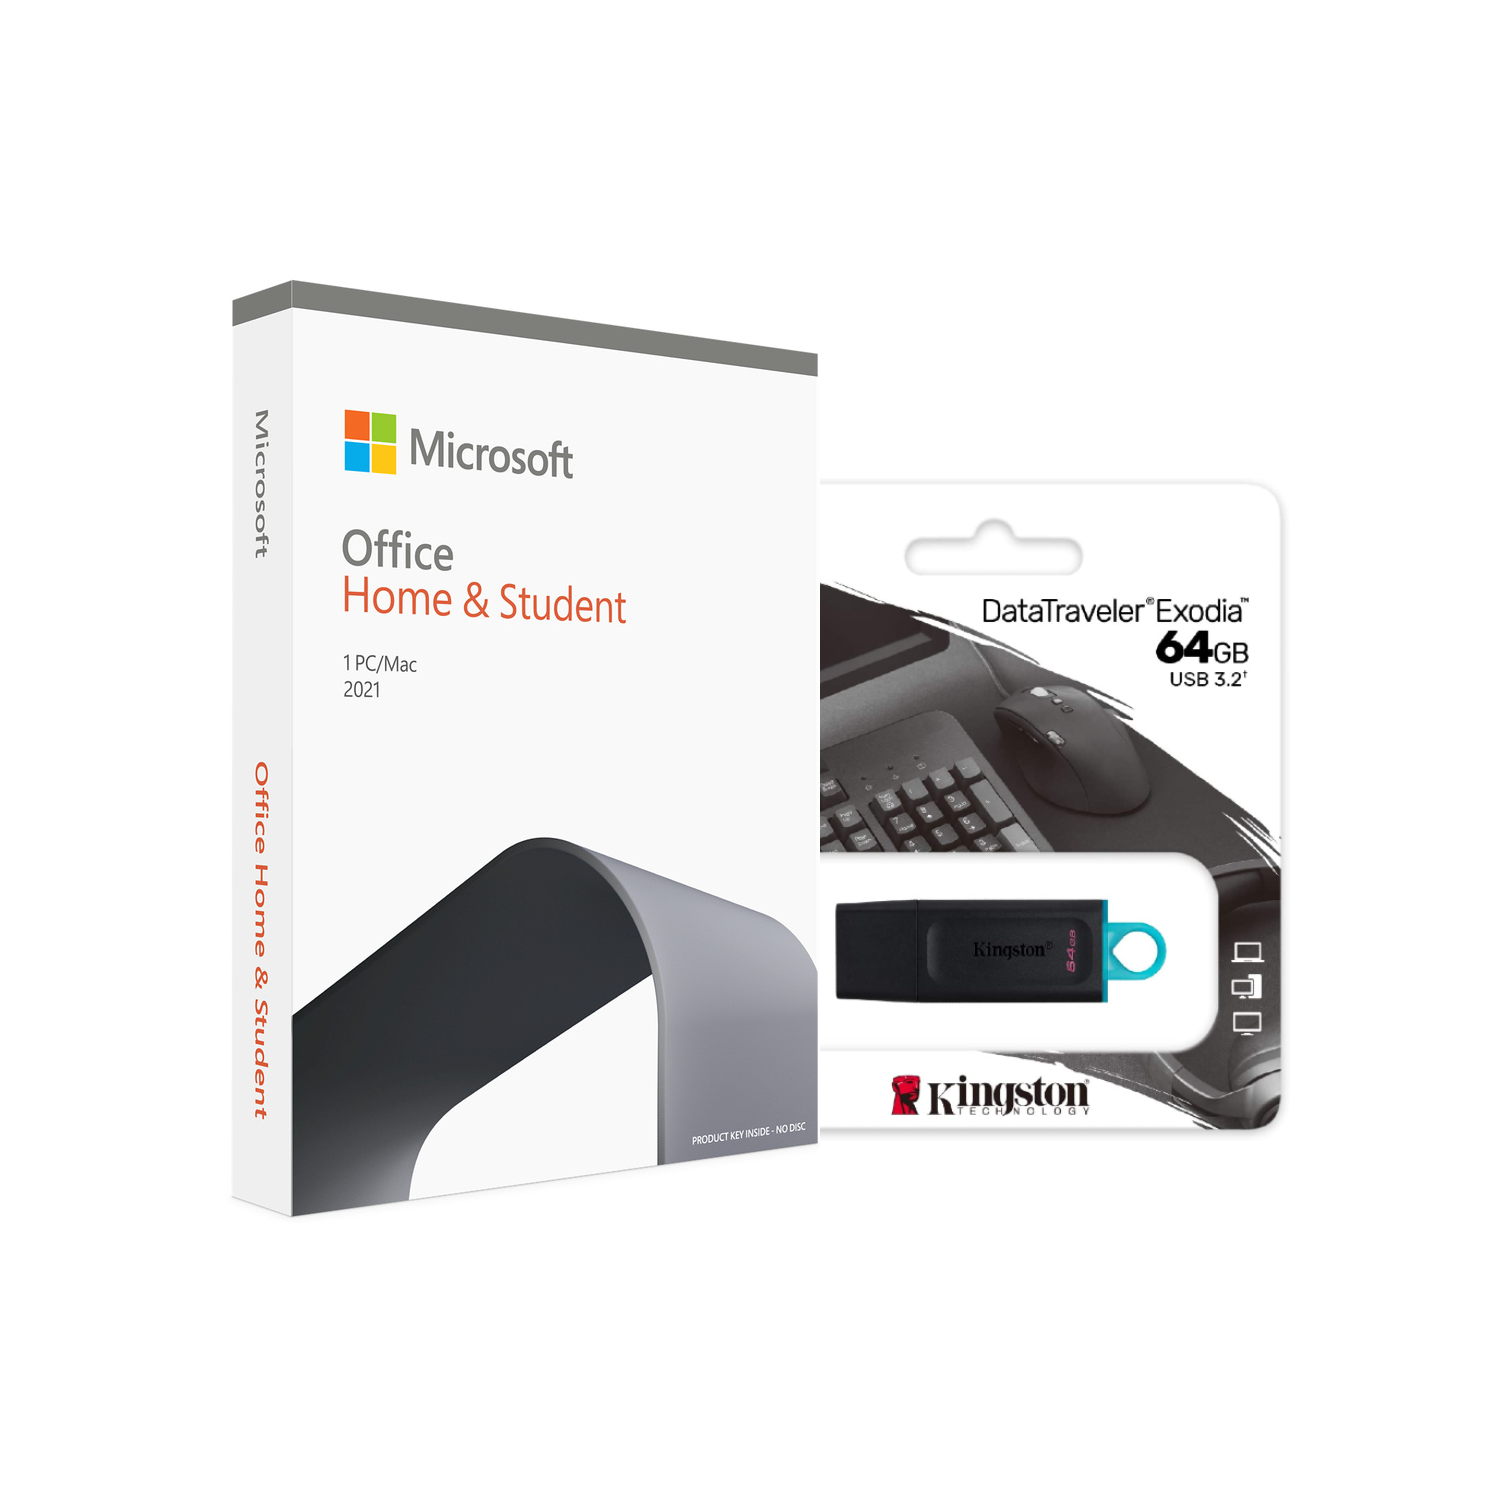 Microsoft Office Home & Student 2021 | 1 Person, One-Time Purchase, Retail Box (w/ Key Card inside), English (PC/Mac) w/ Kingston 64GB USB 3.2 Drive